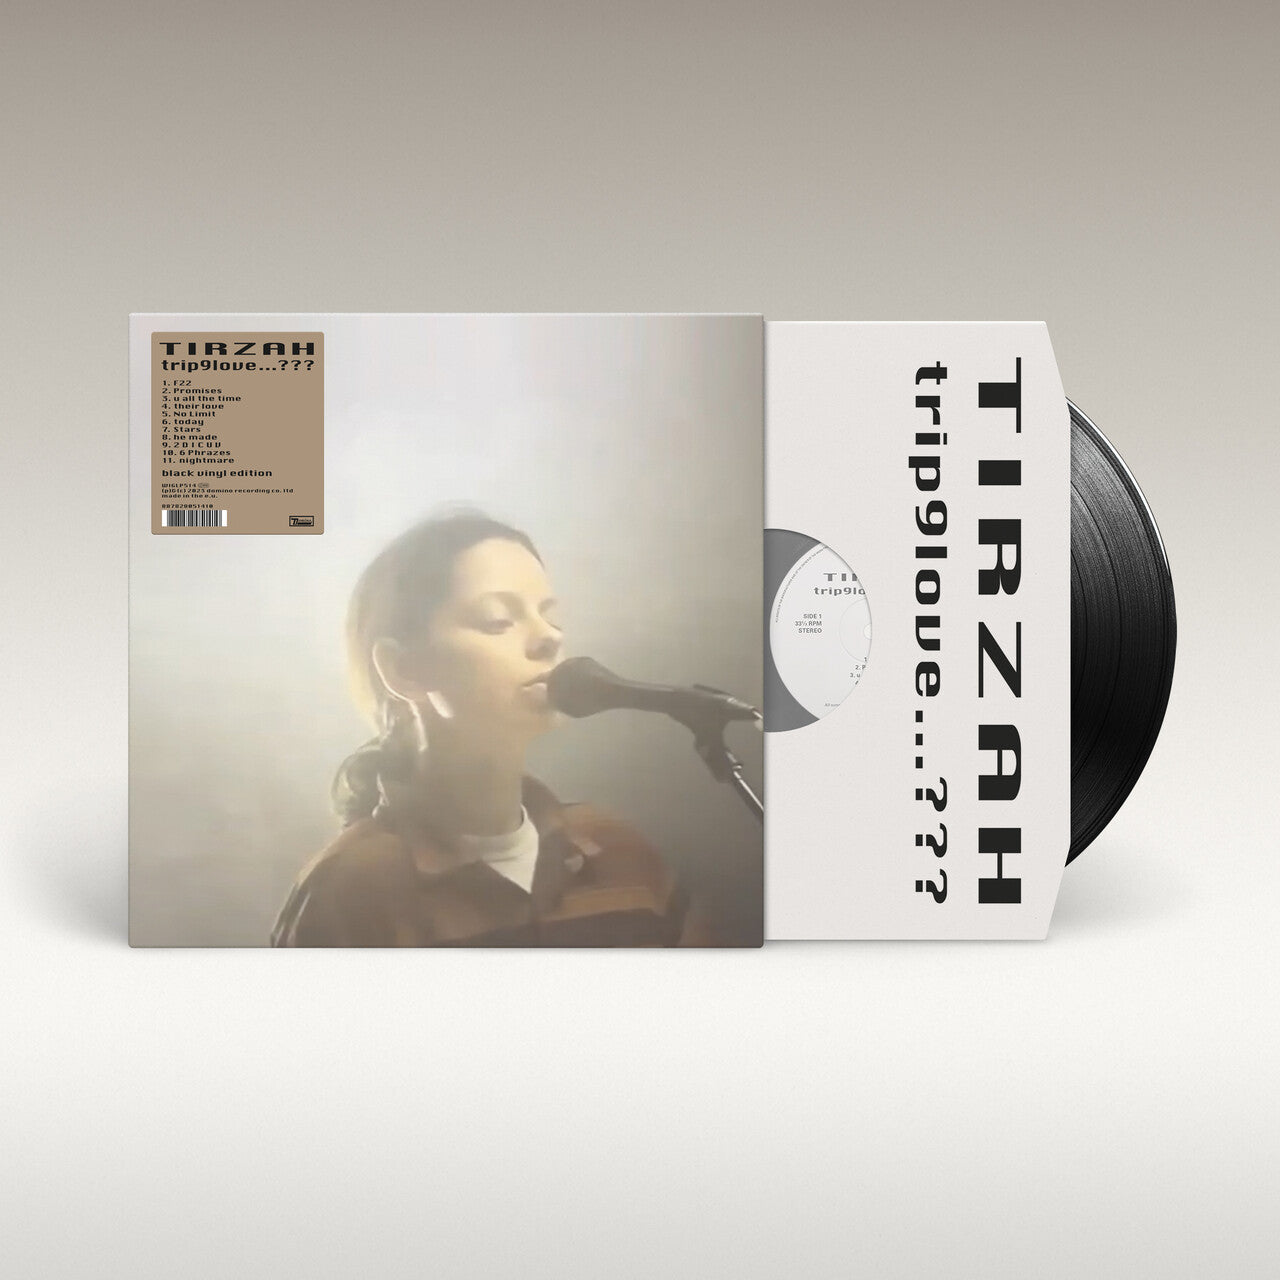 Tirzah - trip9love...???: Vinyl LP